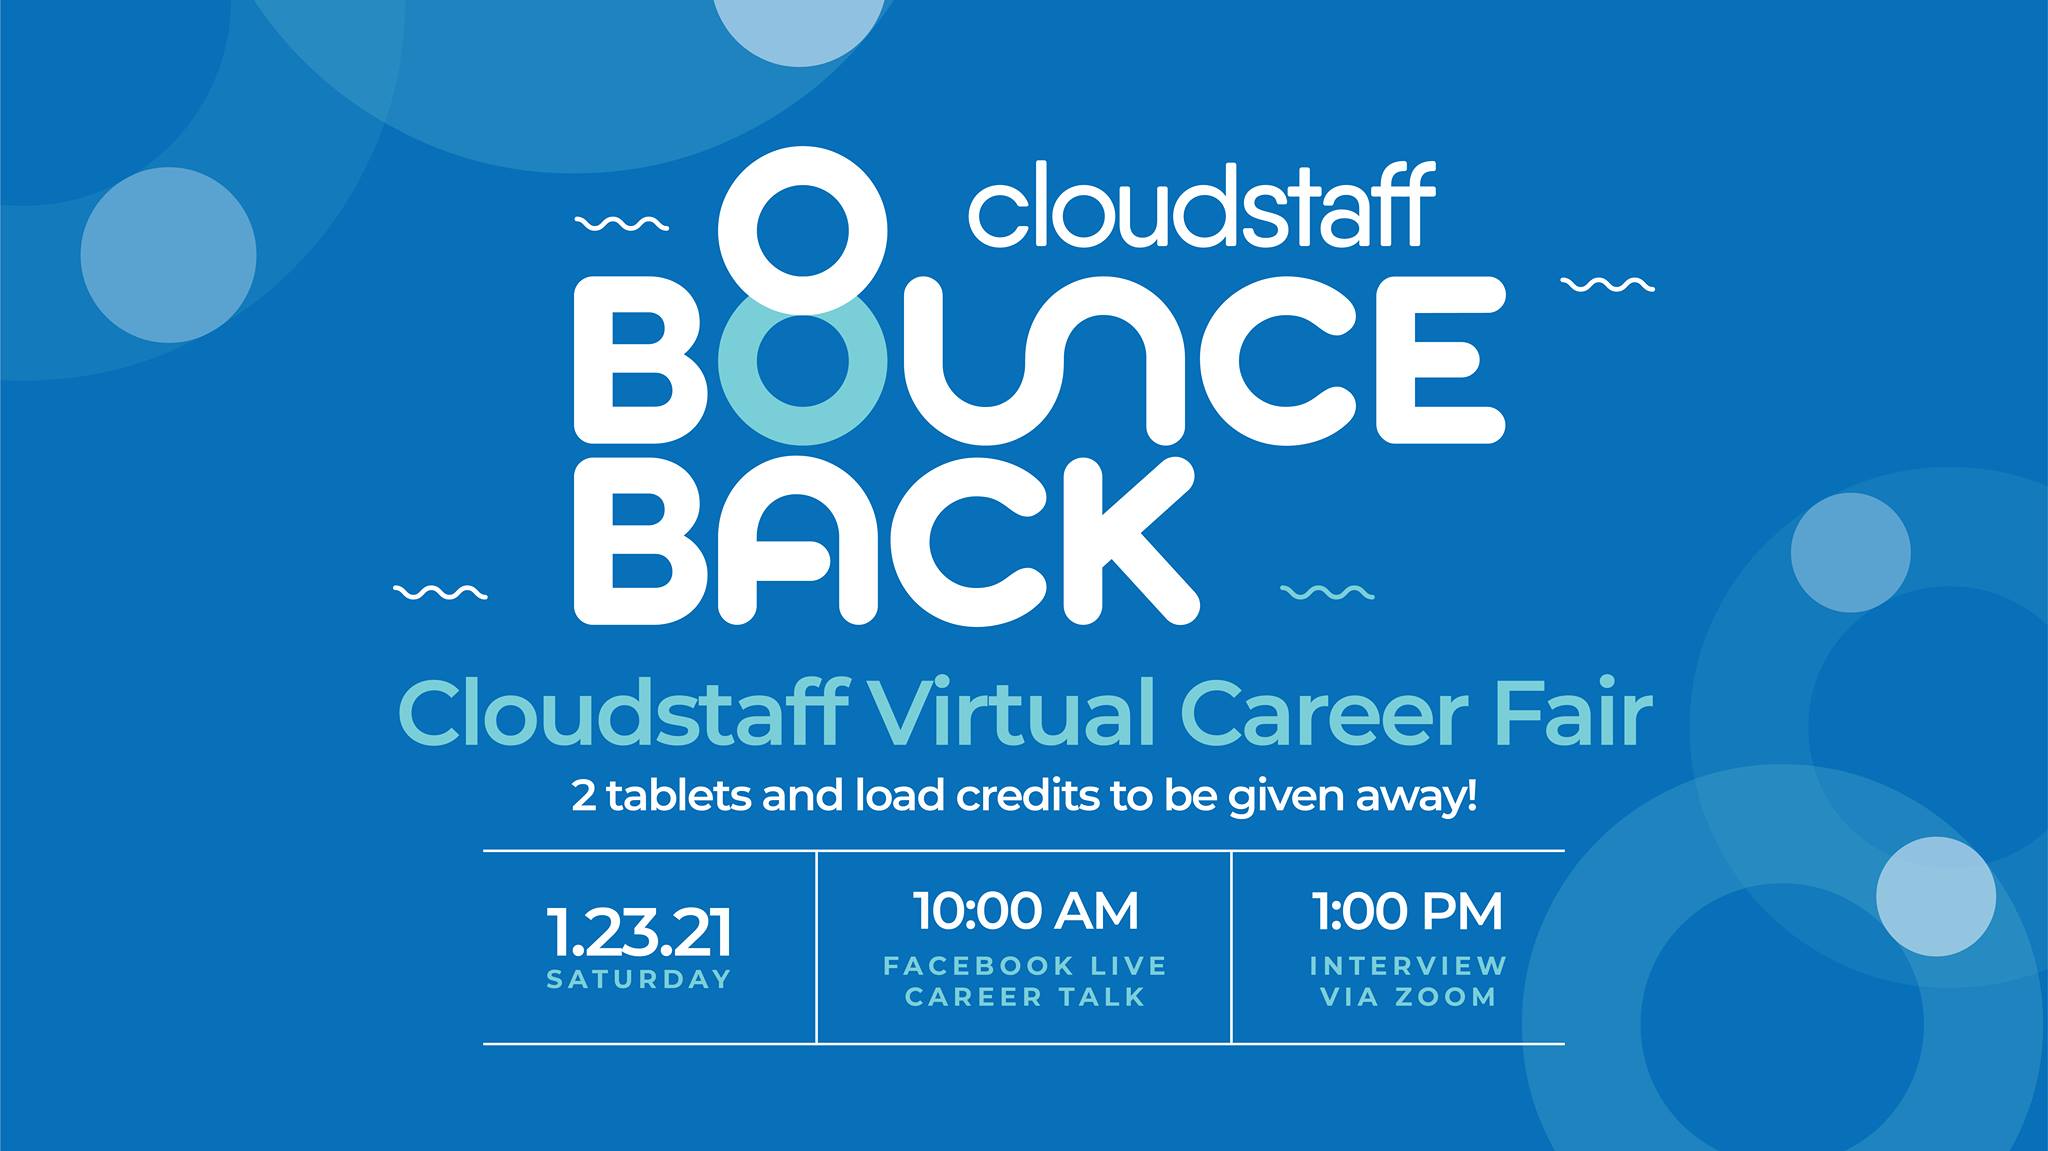 Cloudstaff to hold ‘Bounce Back Virtual Career Fair’